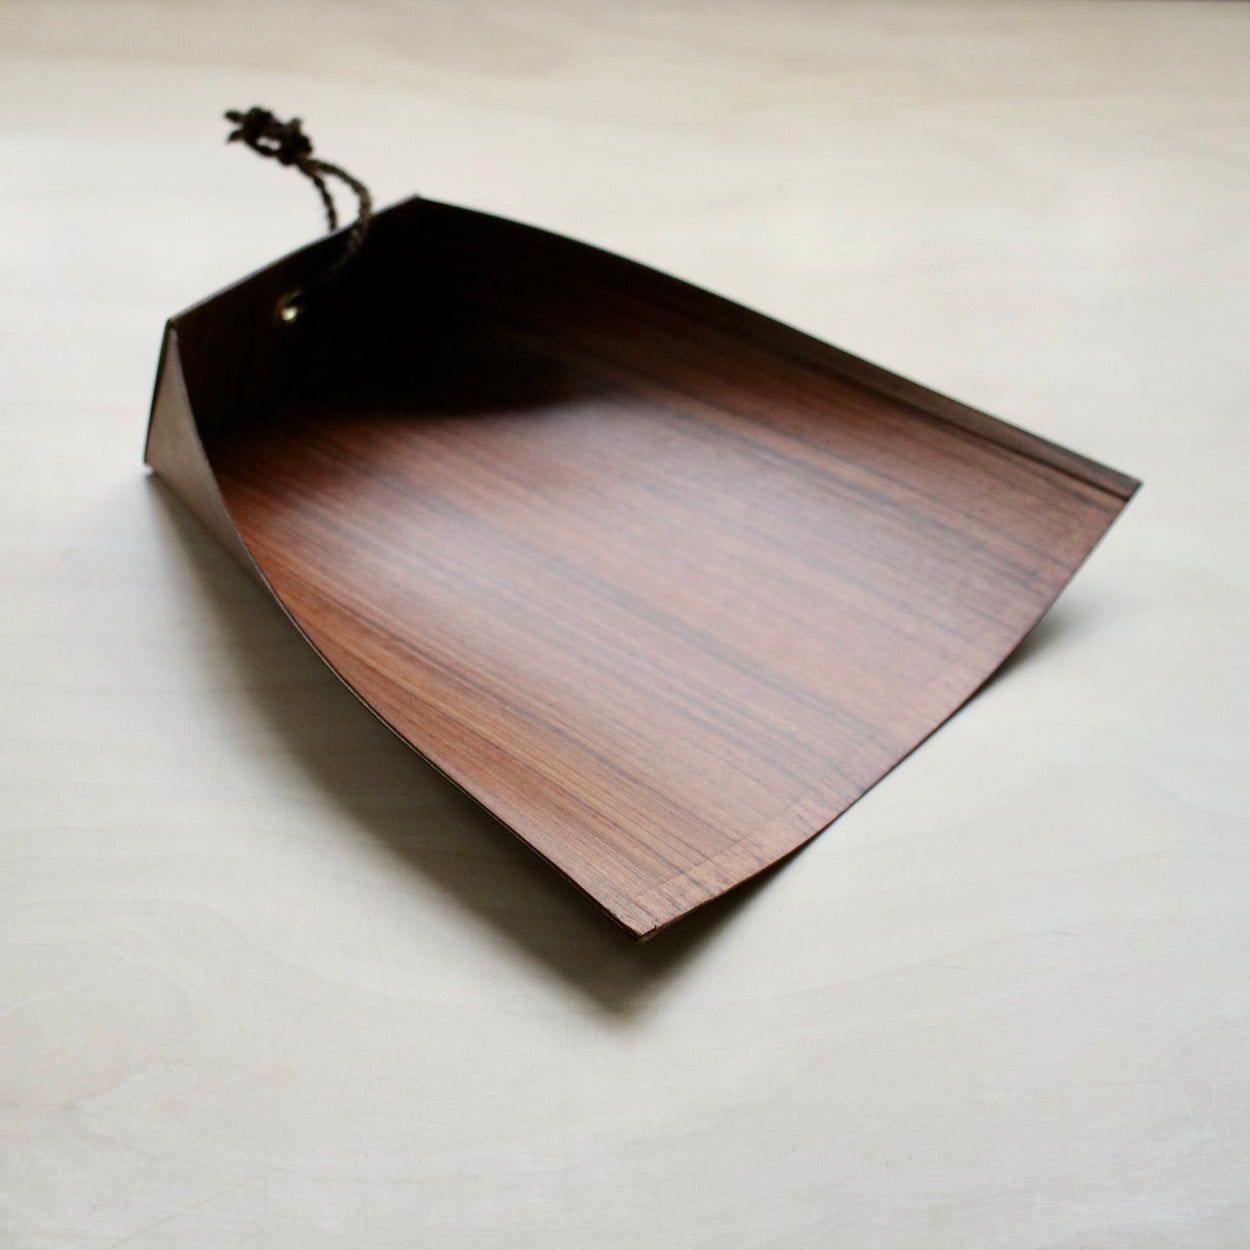 Side profile of Japanese Harimi Dustpan on pale wood background